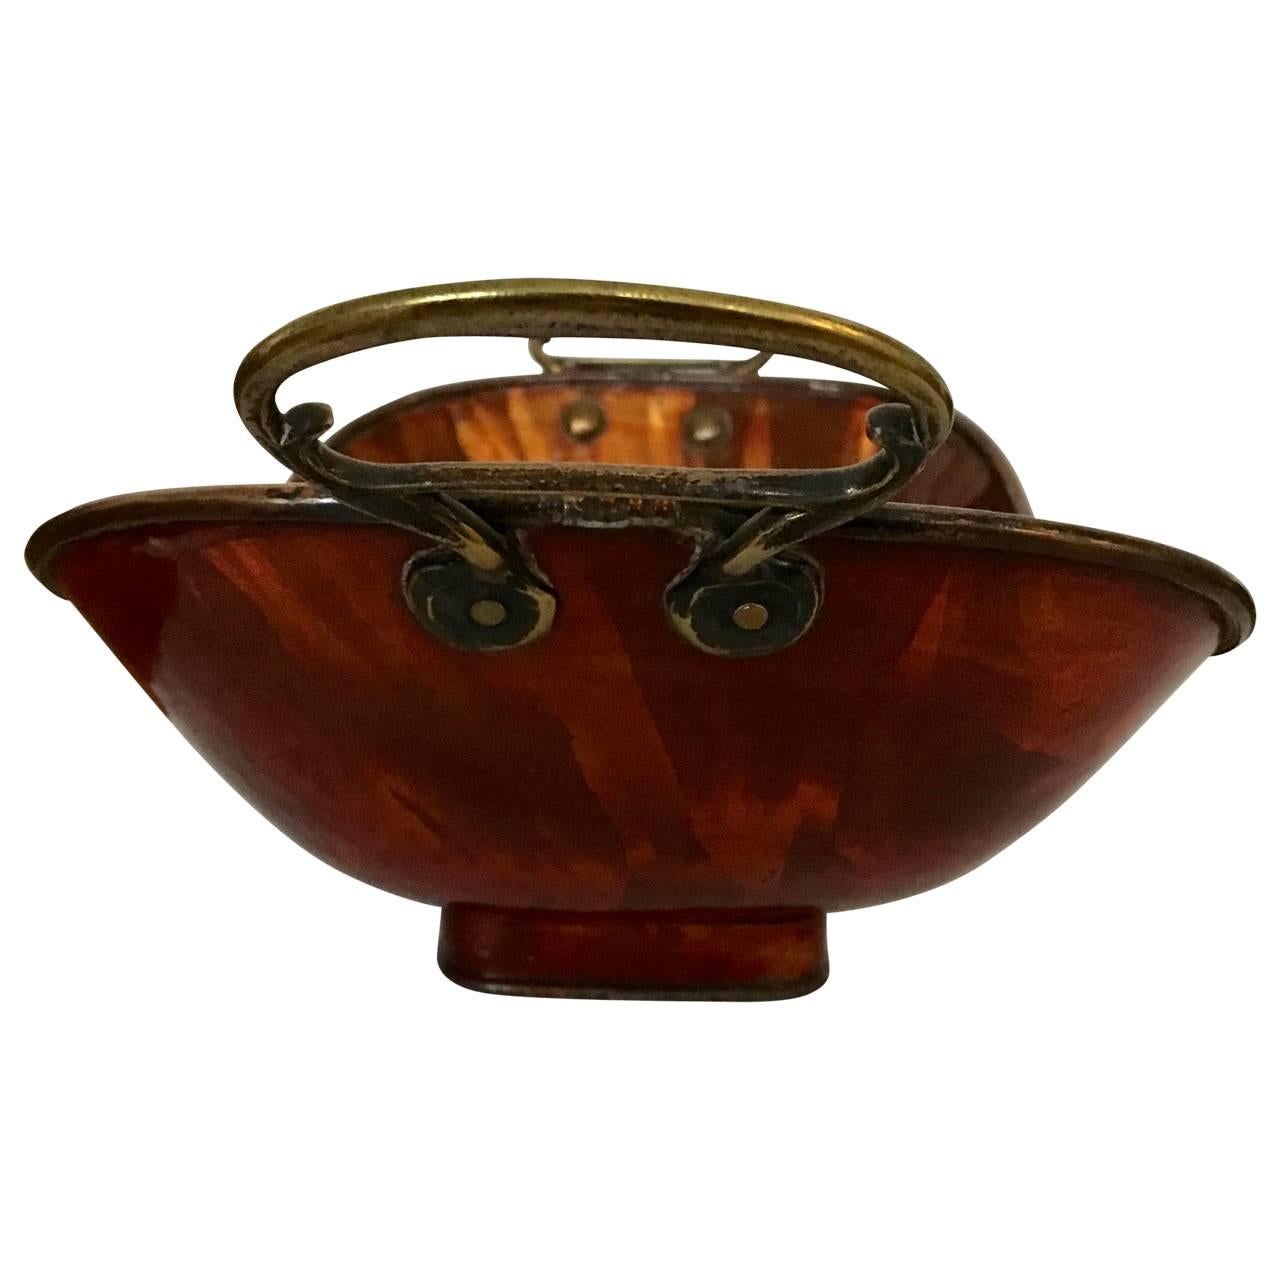 Amazing 19th century enamel bowl or bread basket.